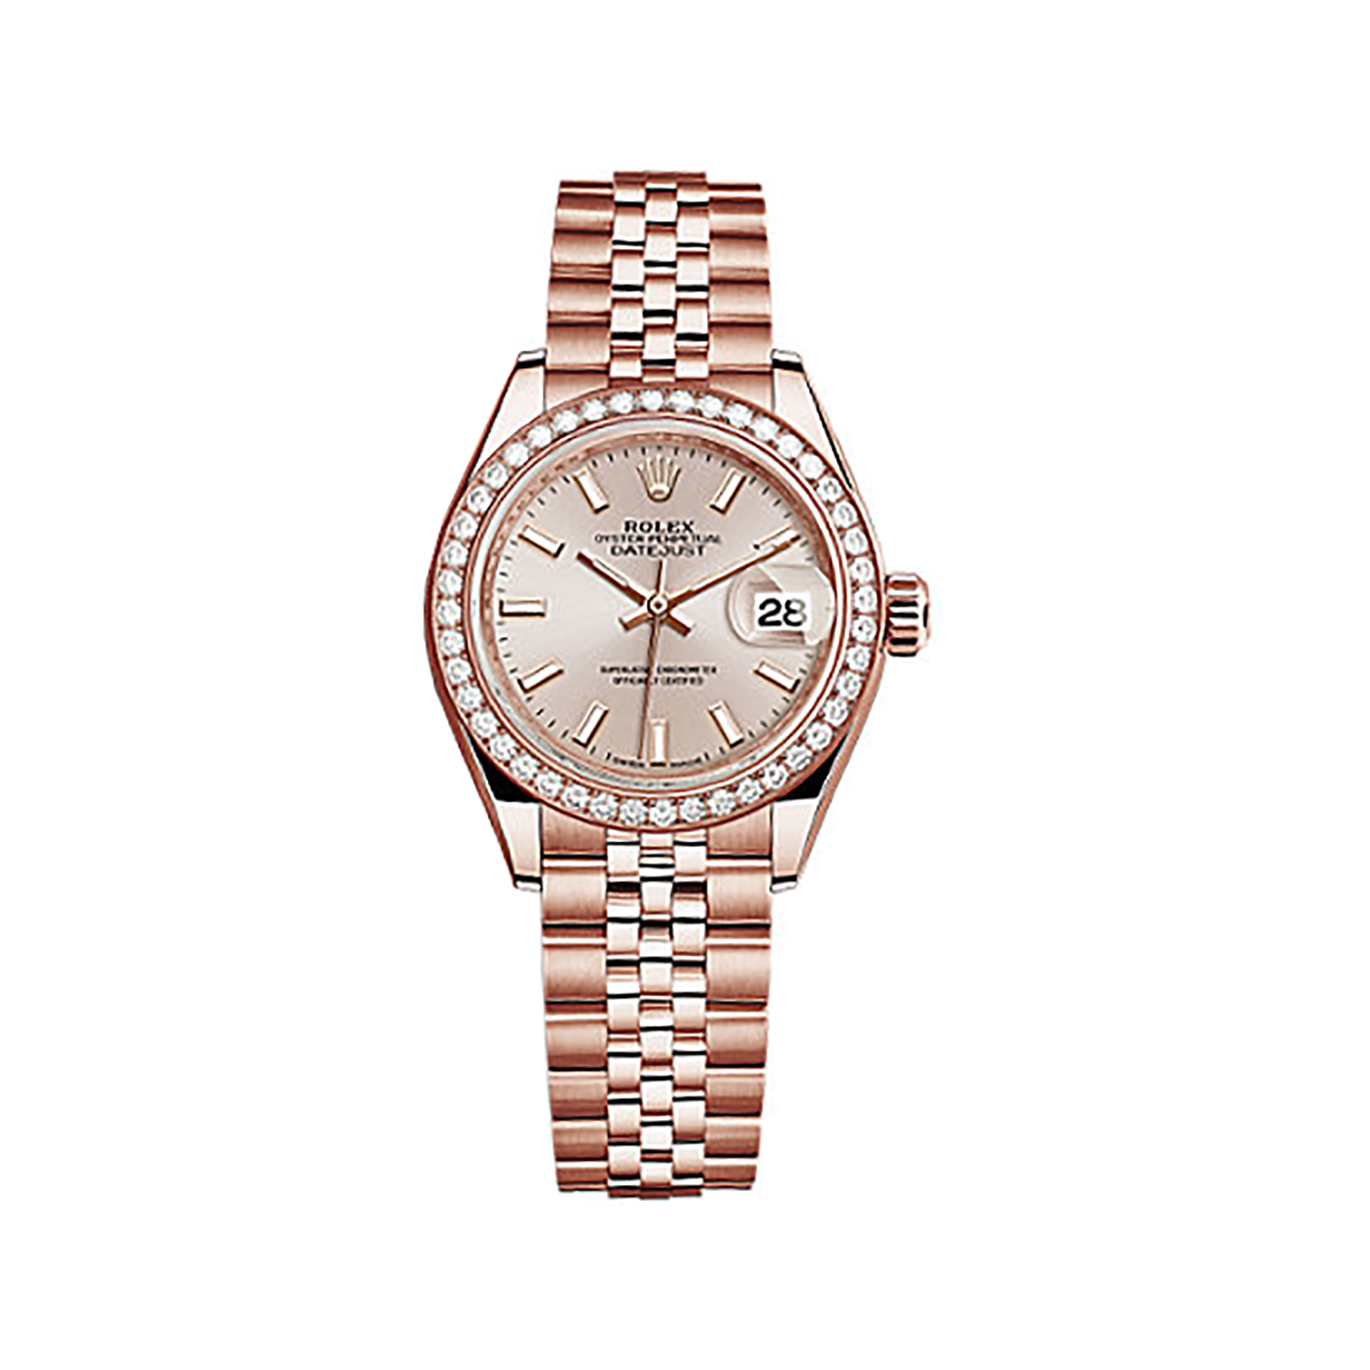 Lady-Datejust 28 279135RBR Rose Gold & Diamonds Watch (Sundust)